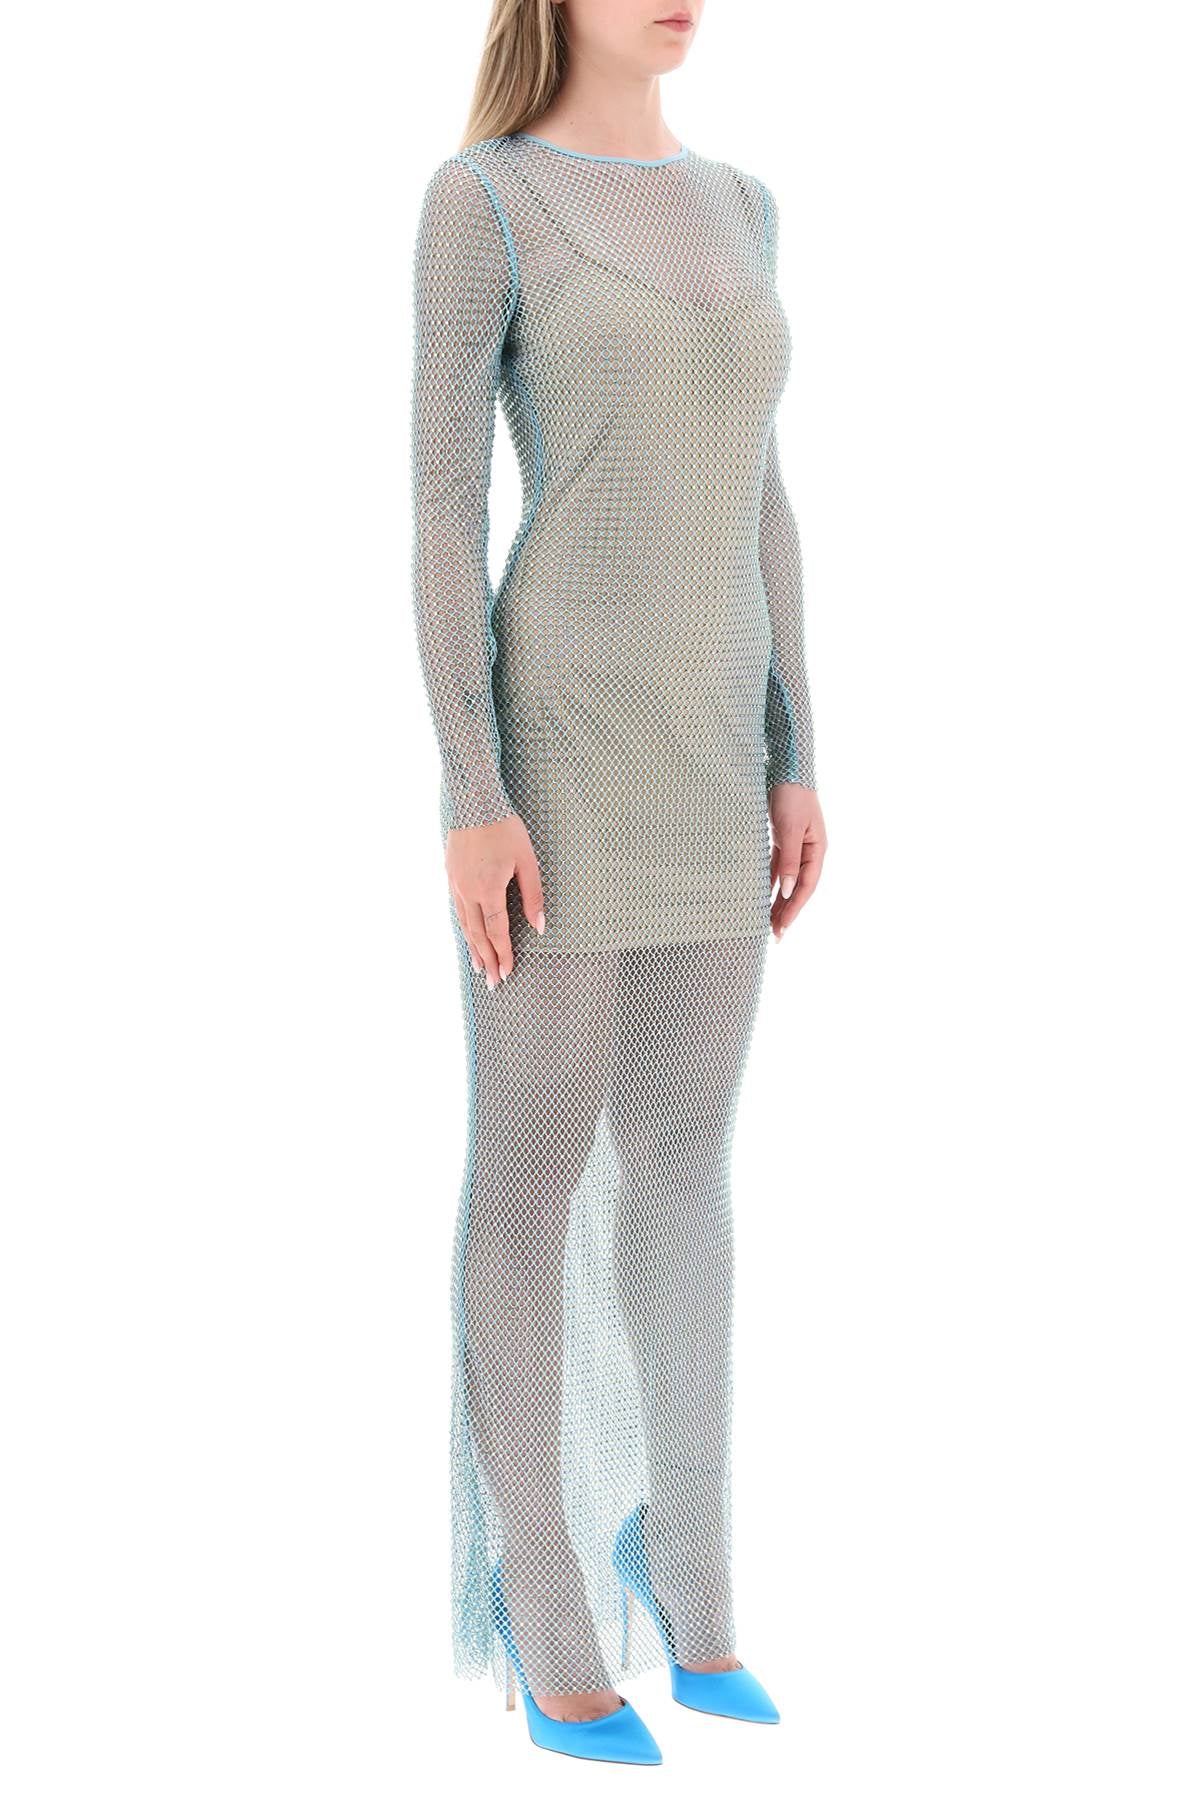 Self portrait maxi dress in fishnet with rhinestones-1